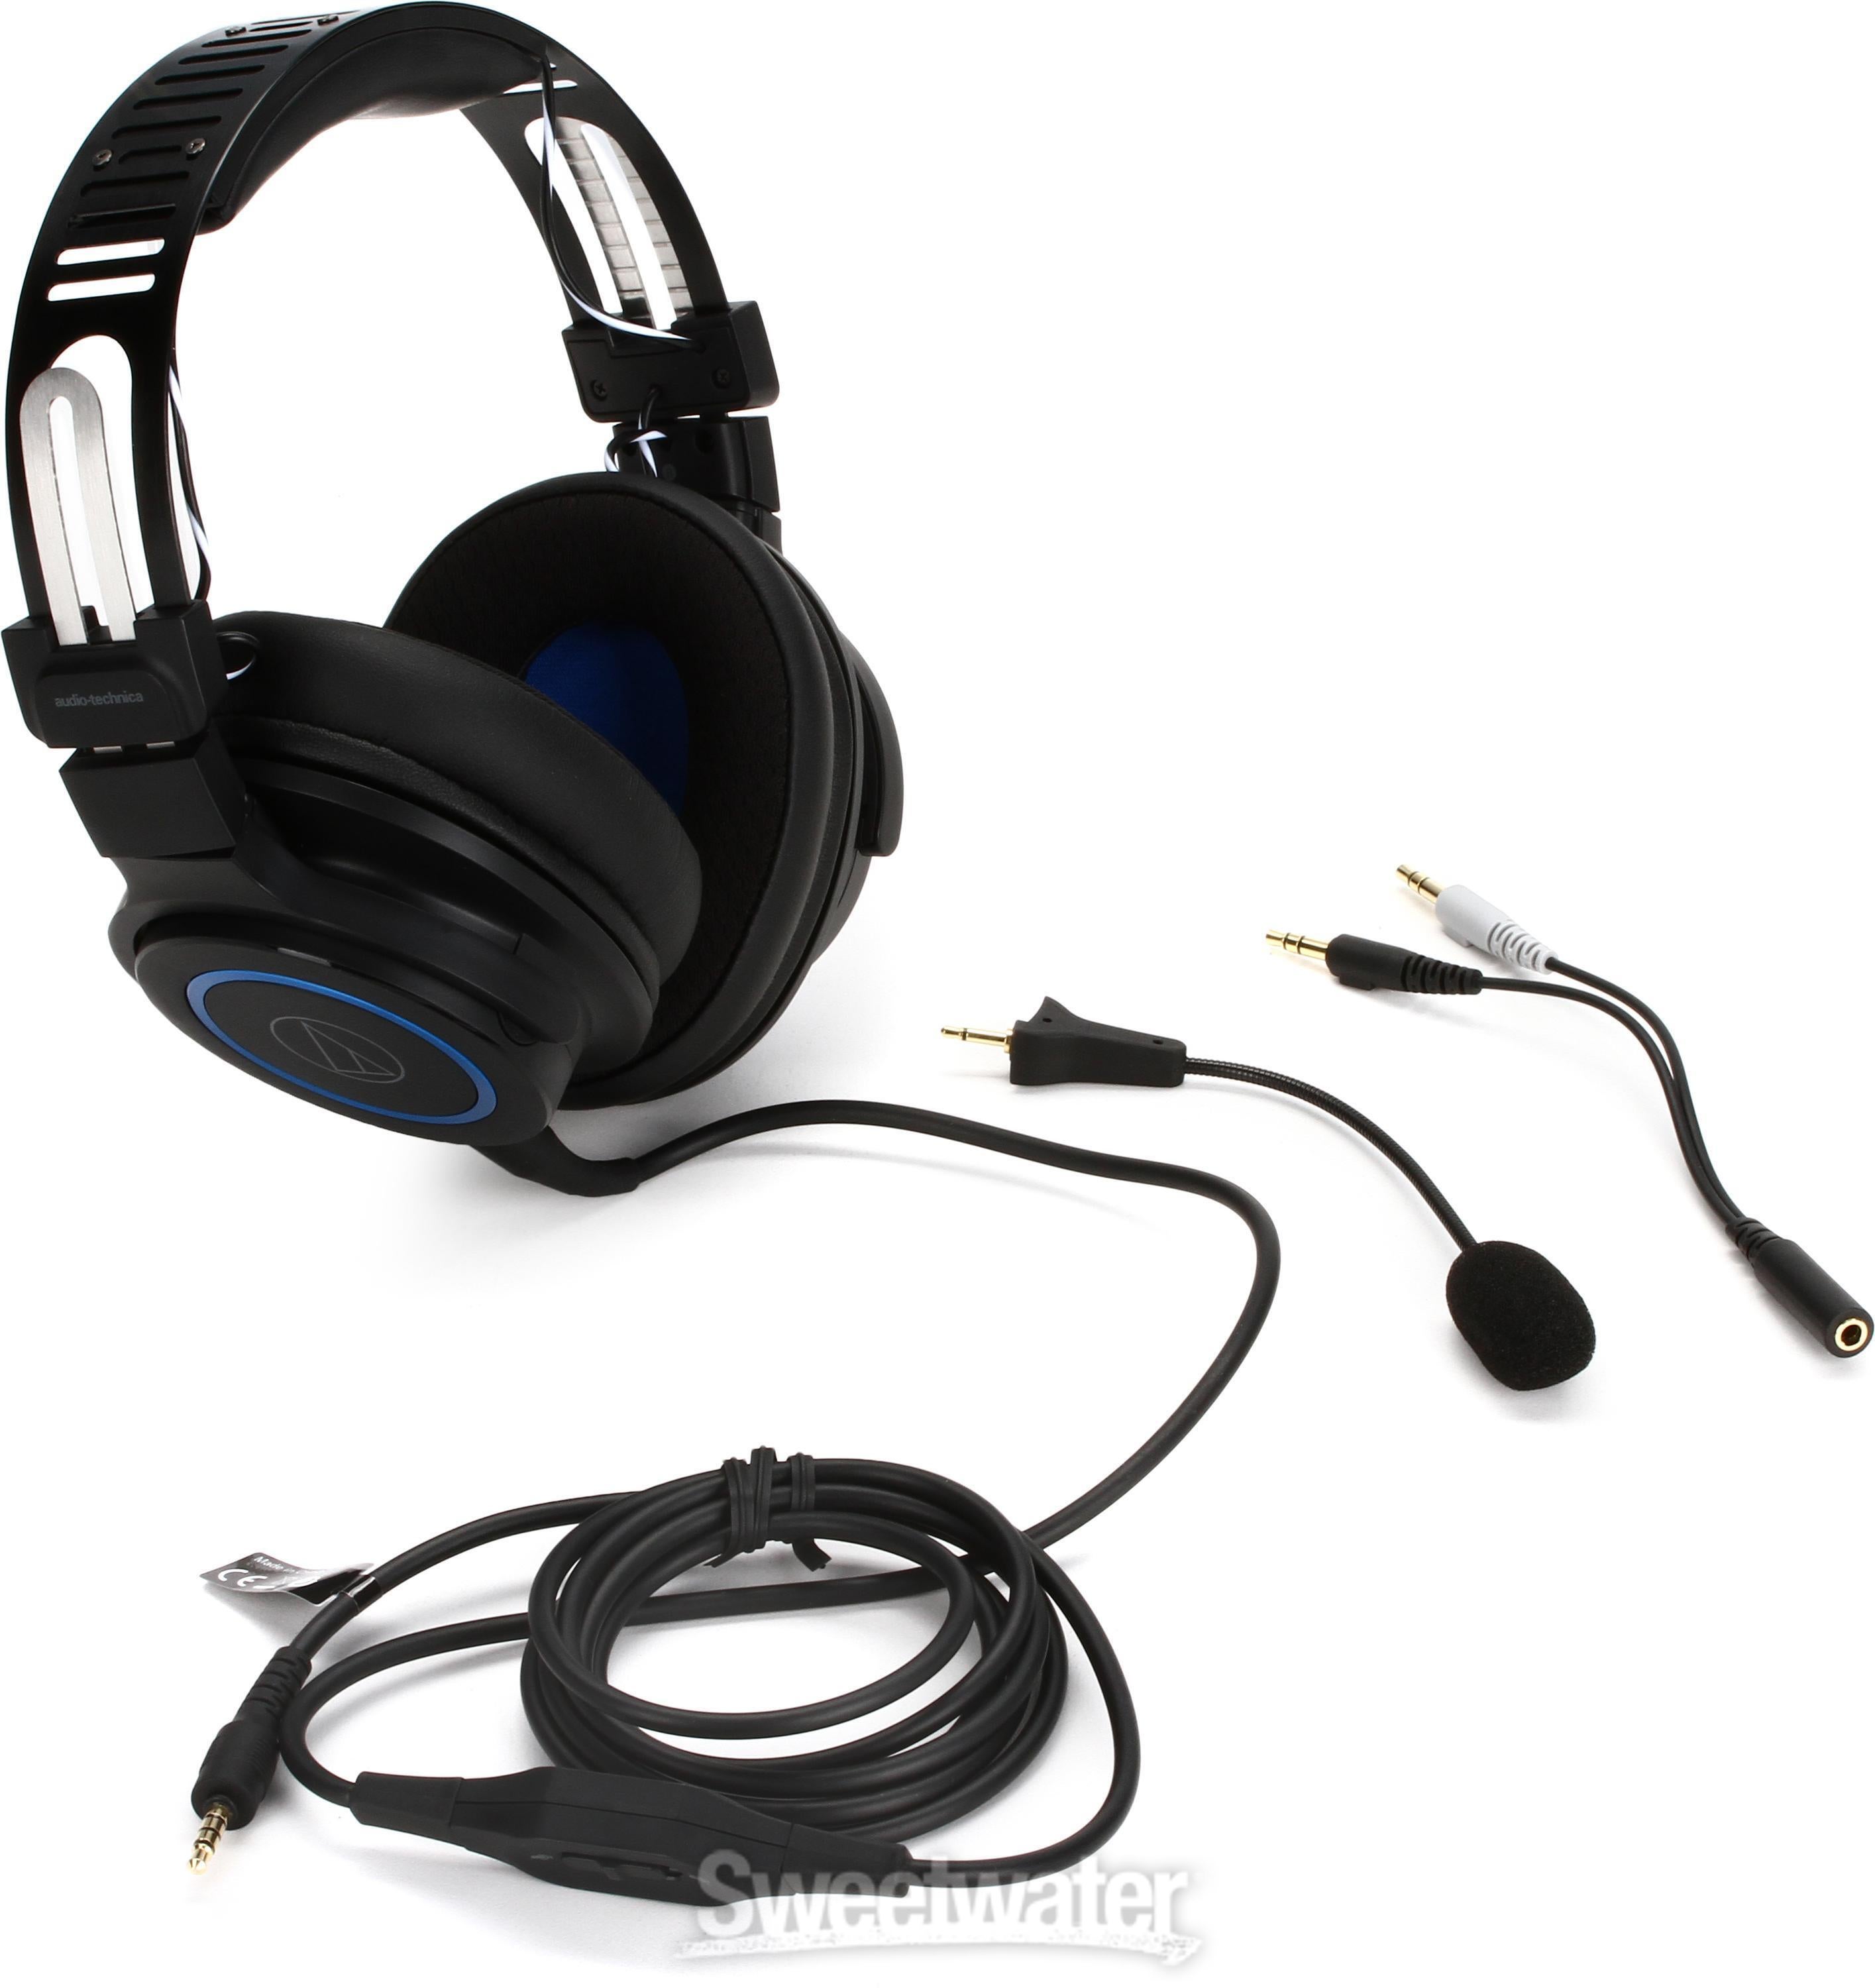 Audio-Technica ATH-G1 Premium Headset with Detachable Mic, 3.5mm